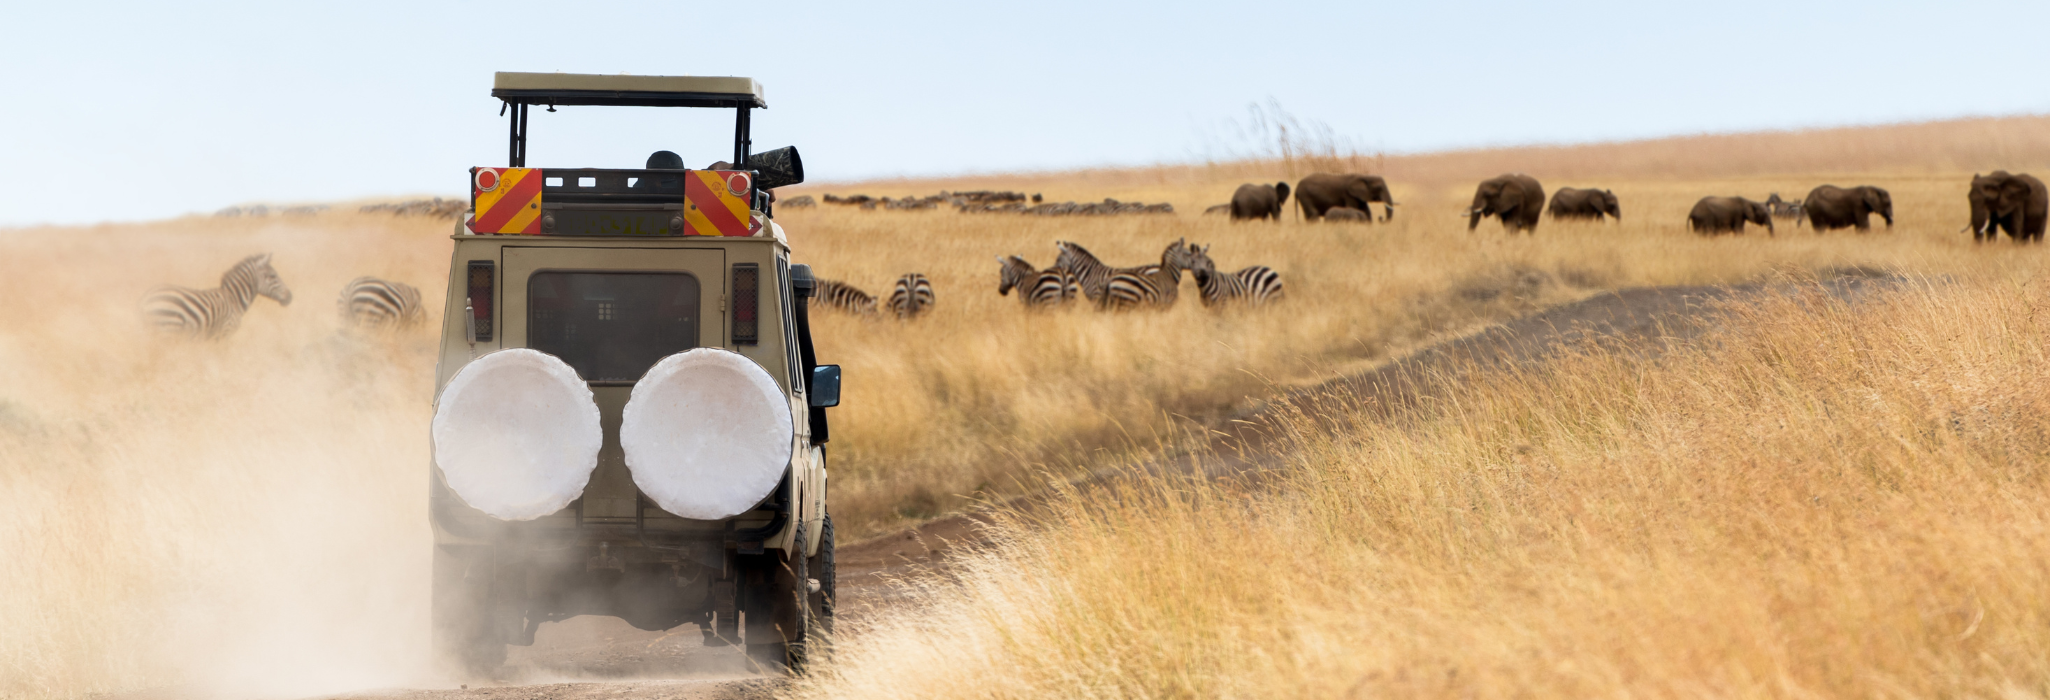 Safari jeep i Tanzania